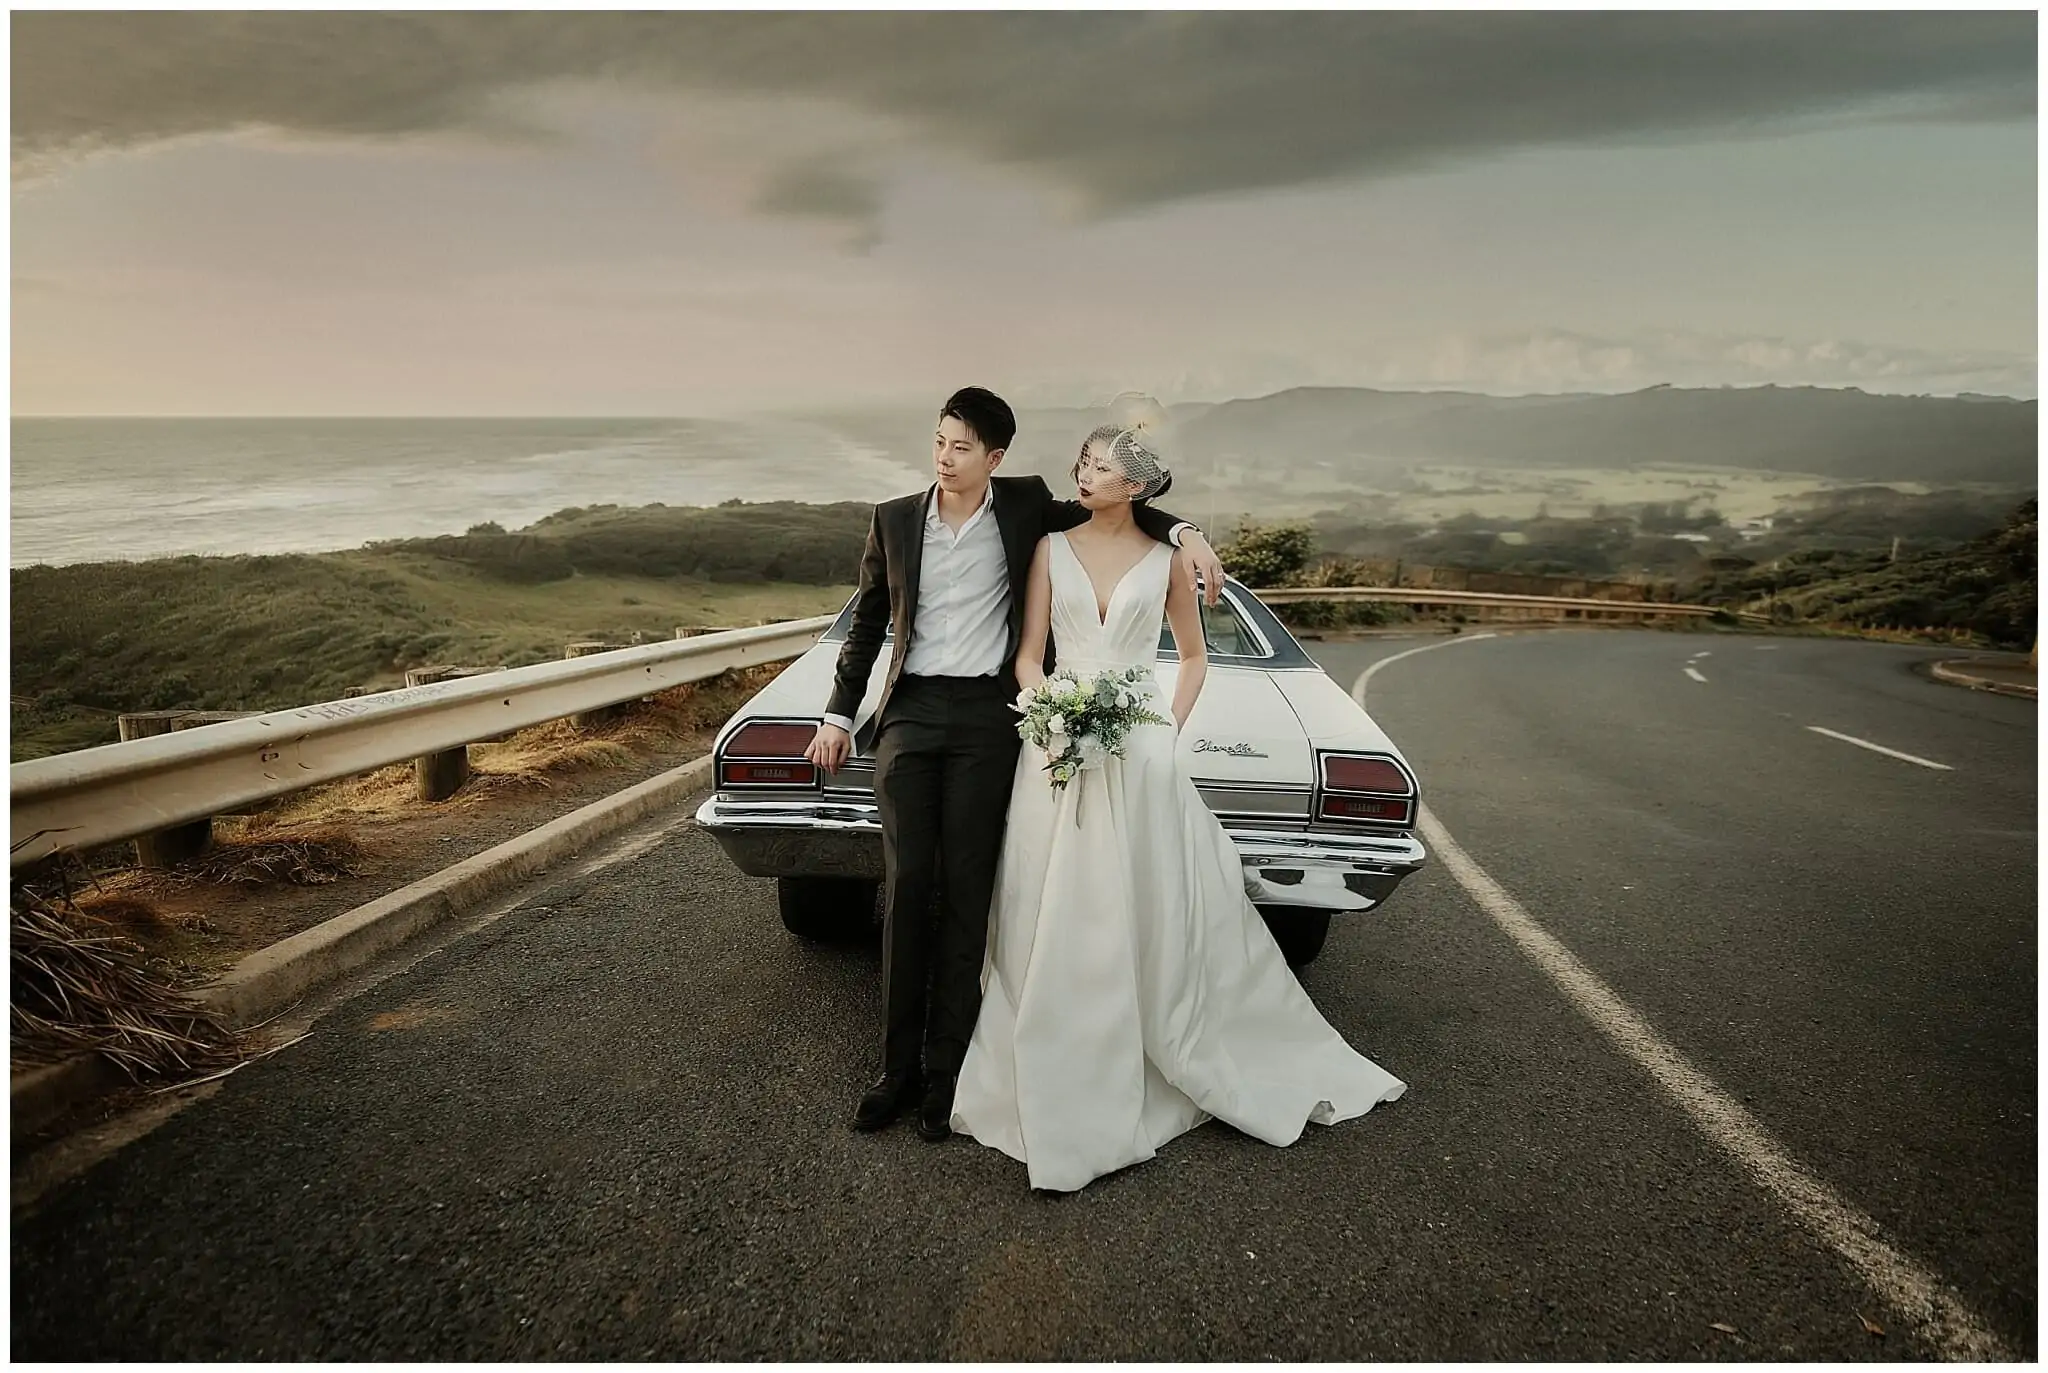 Doris & James' Auckland NZ Pre-Wedding Shoot